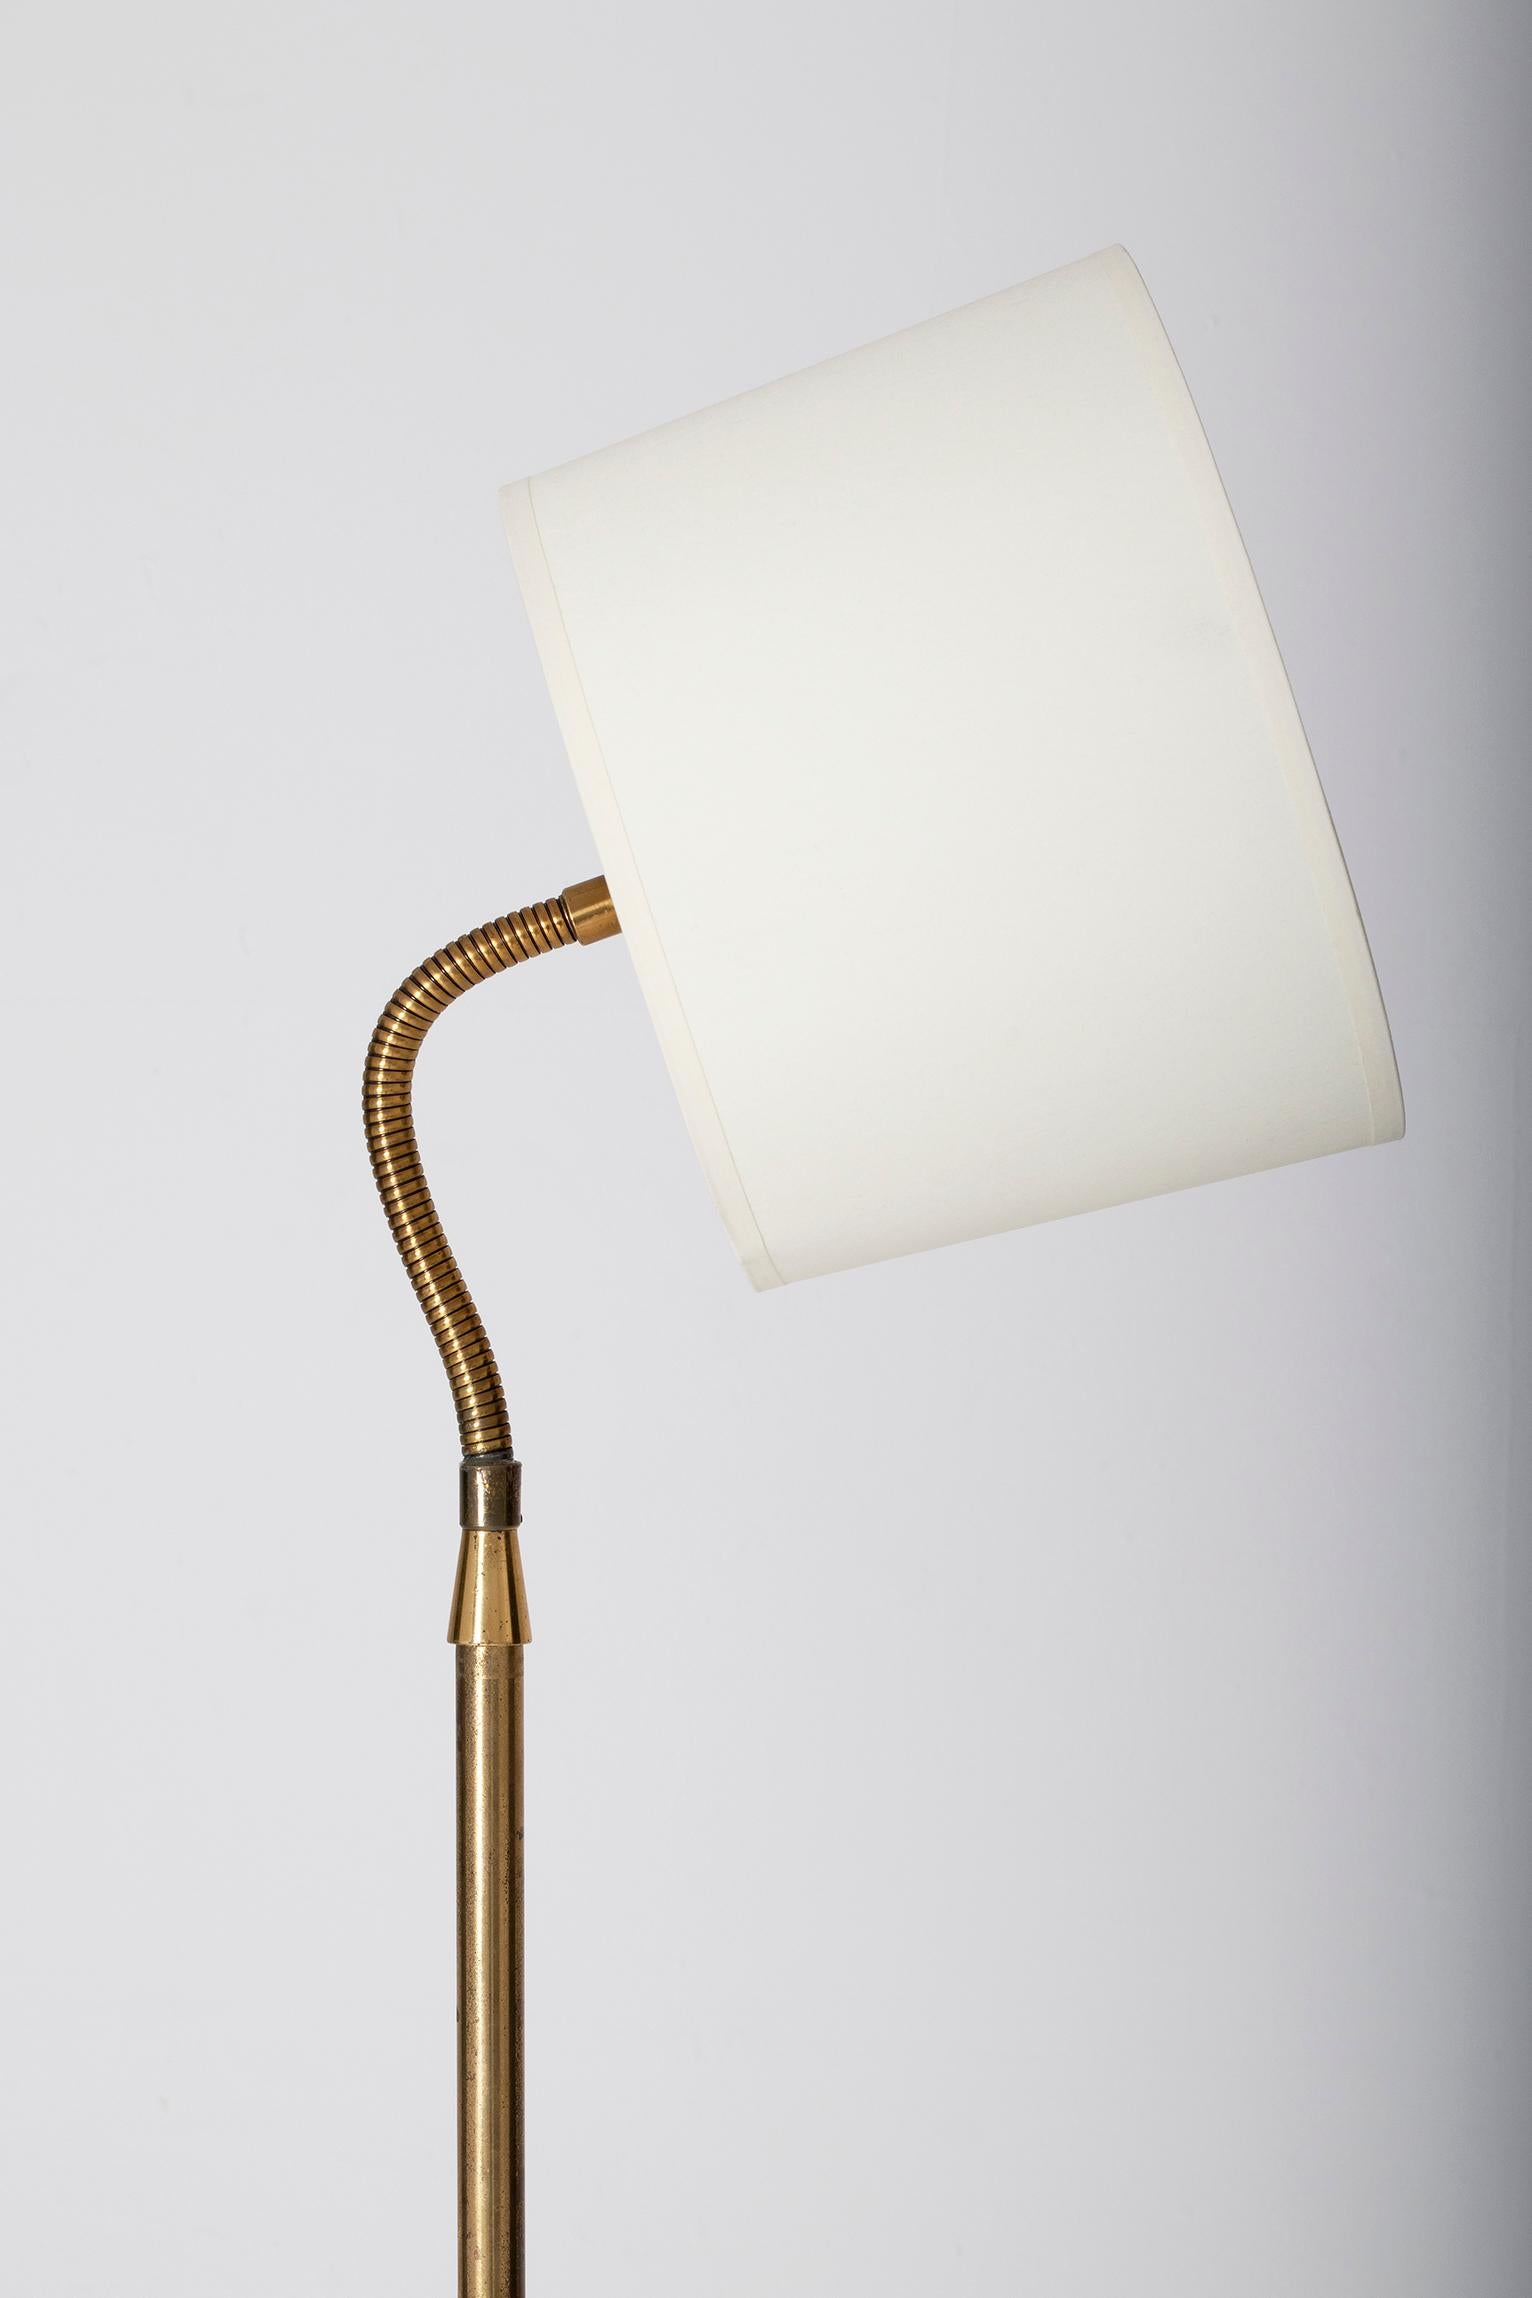 20th Century Midcentury Brass Reading Floor Lamp